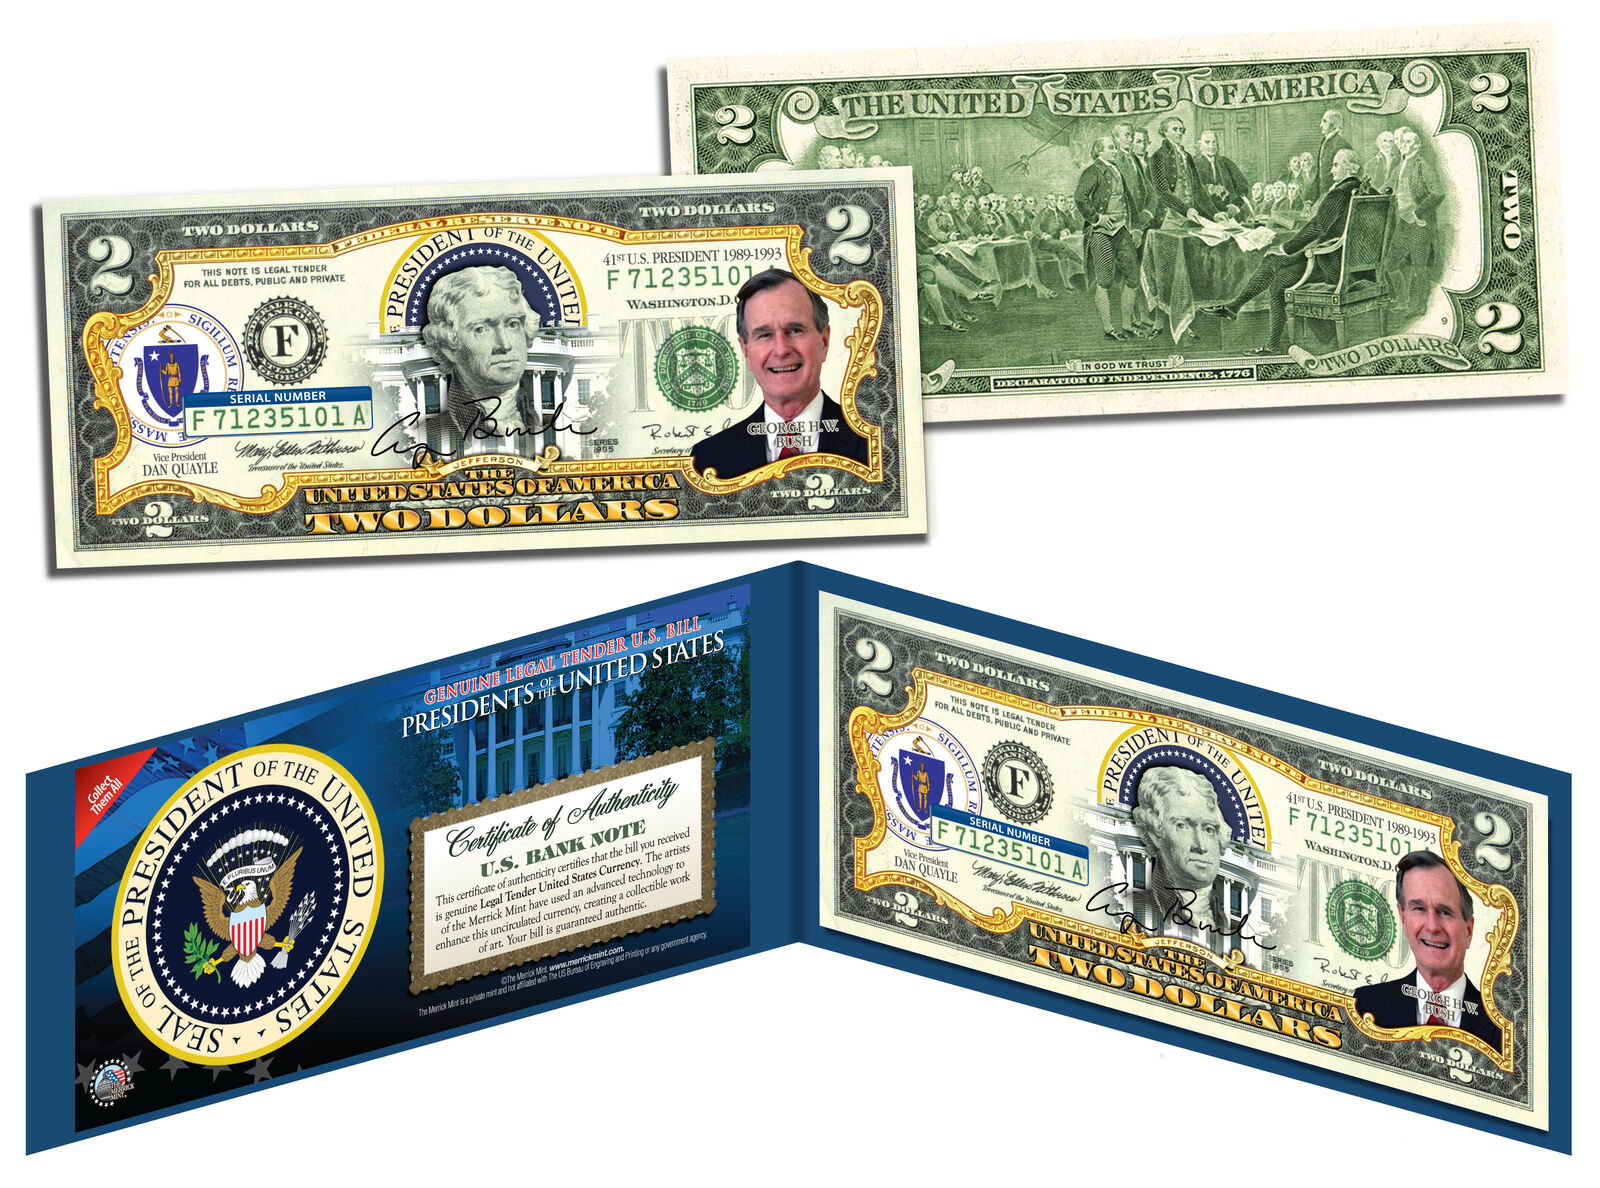 GEORGE H W BUSH * 41st U.S. President * Colorized $2 Bill - Genuine Legal Tender